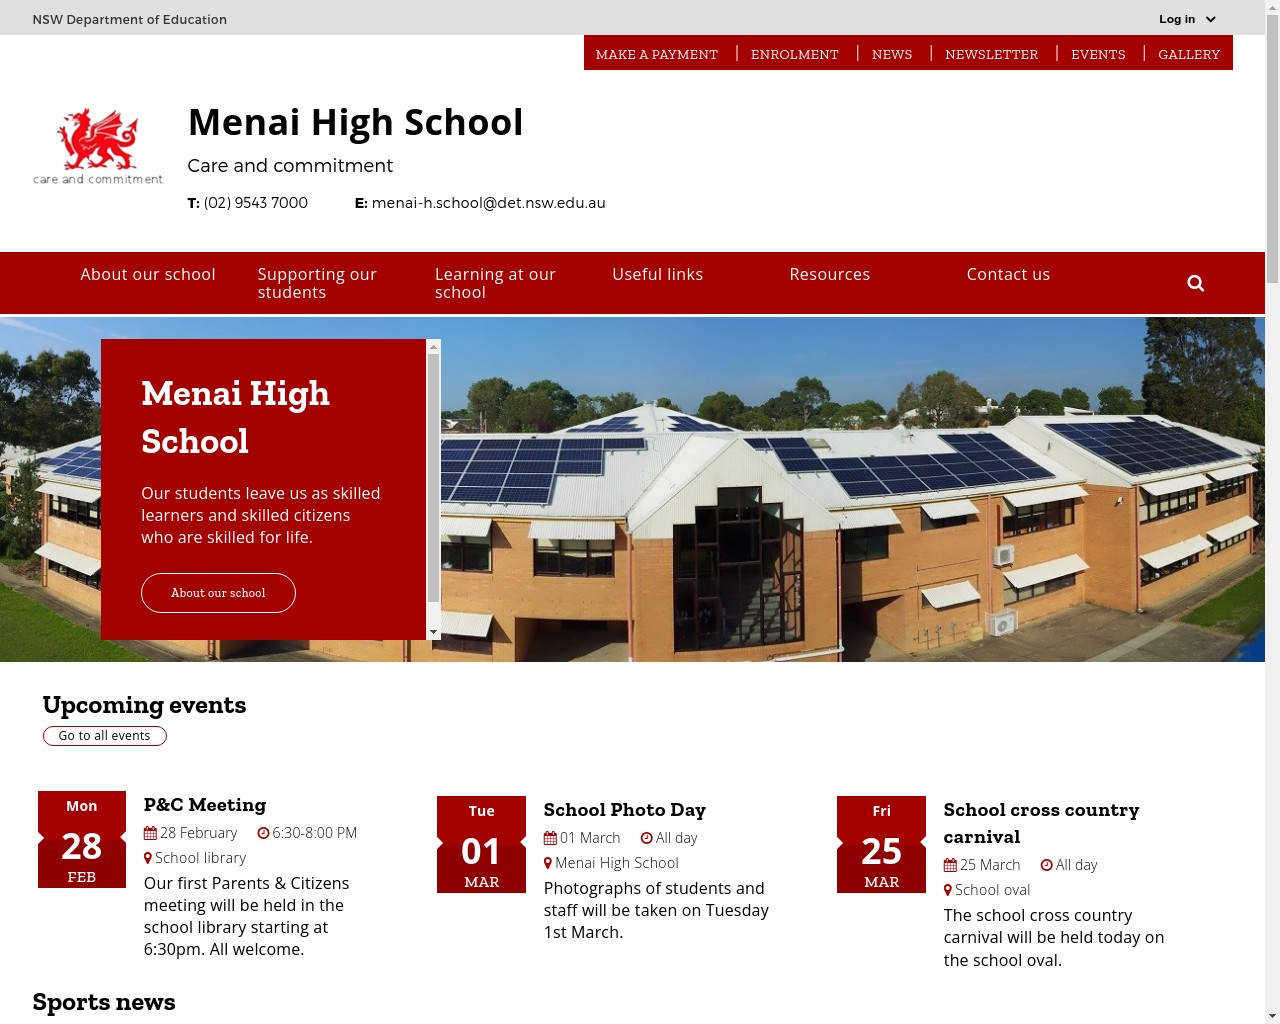 Menai High School